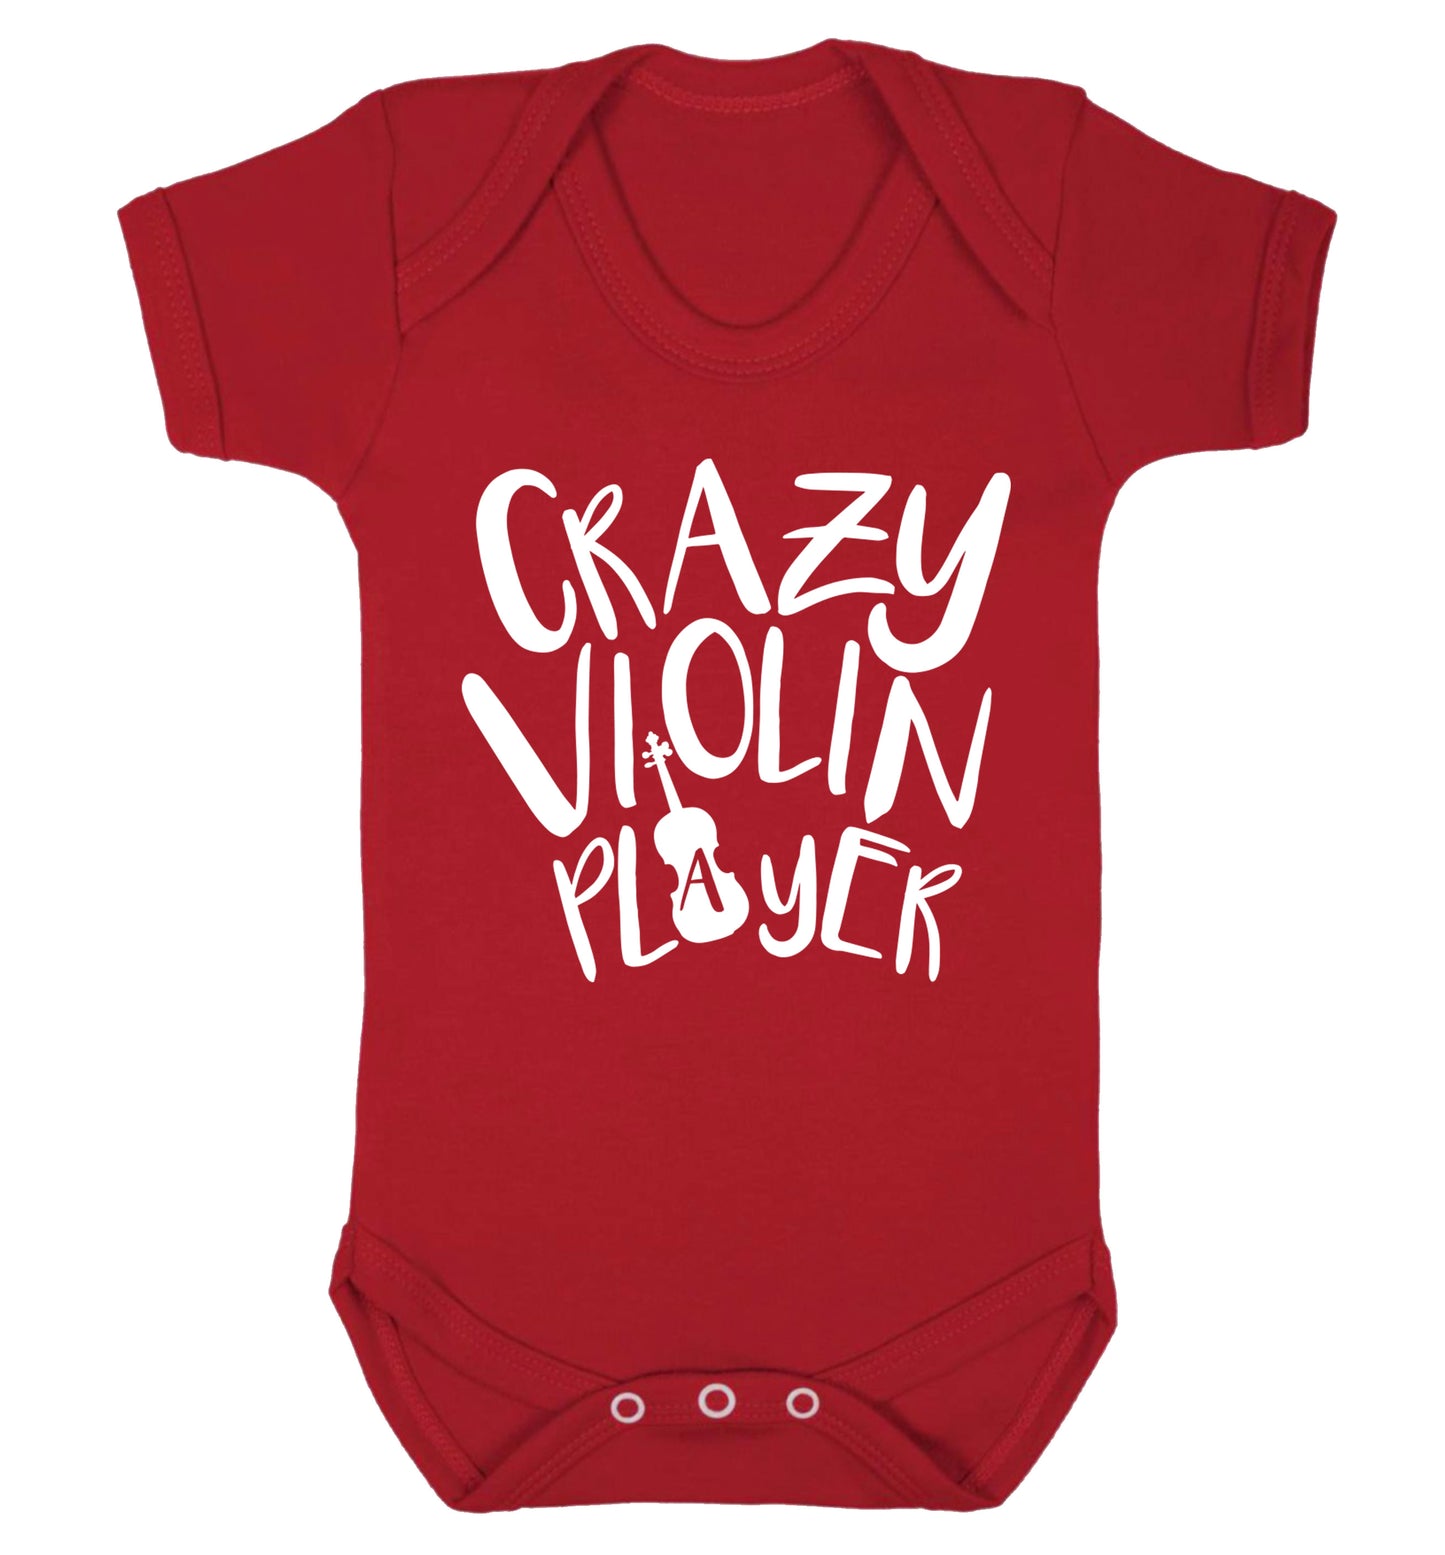 Crazy Violin Player Baby Vest red 18-24 months